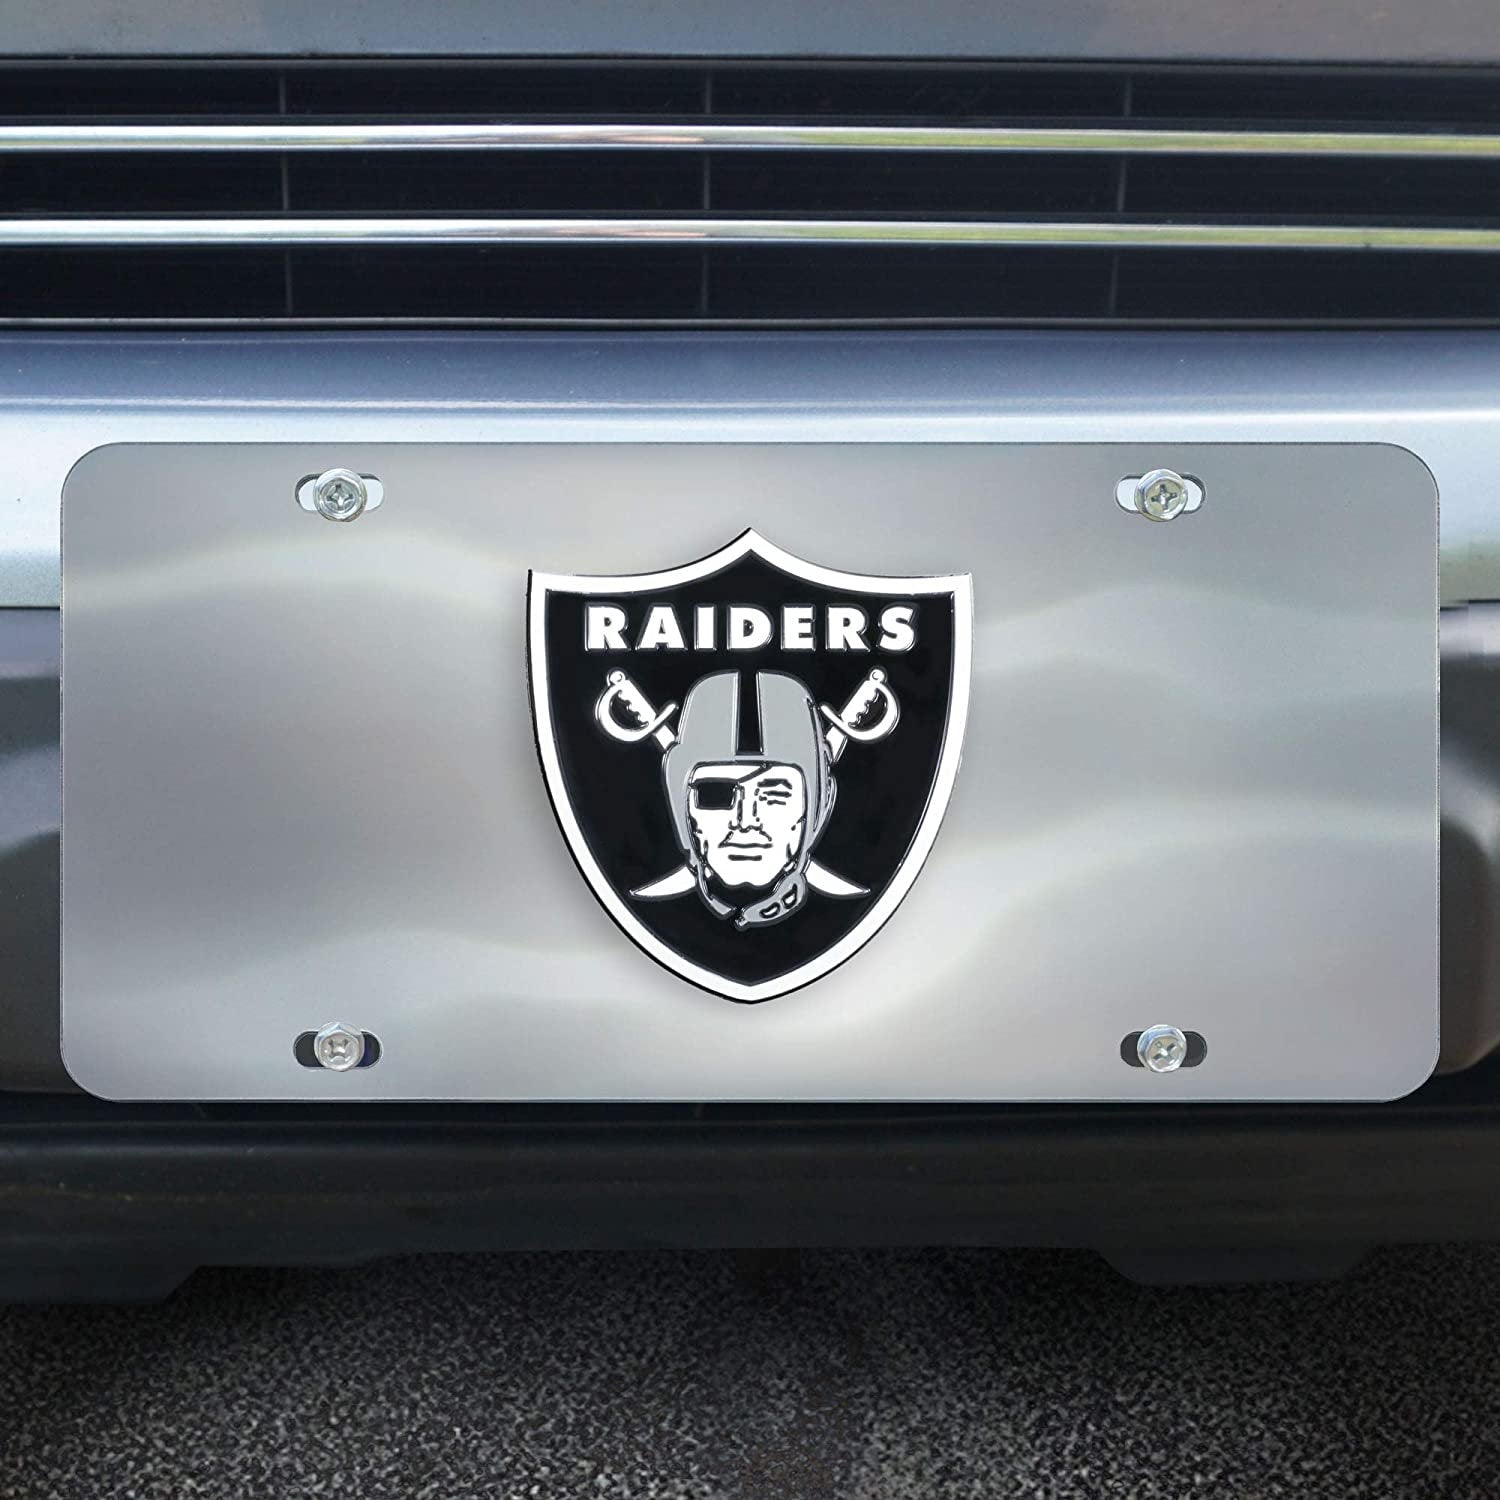 Las Vegas Raiders License Plate Tag, Premium Stainless Steel Chrome Diecast, Raised Solid Metal Color Emblem, 6x12 Inch